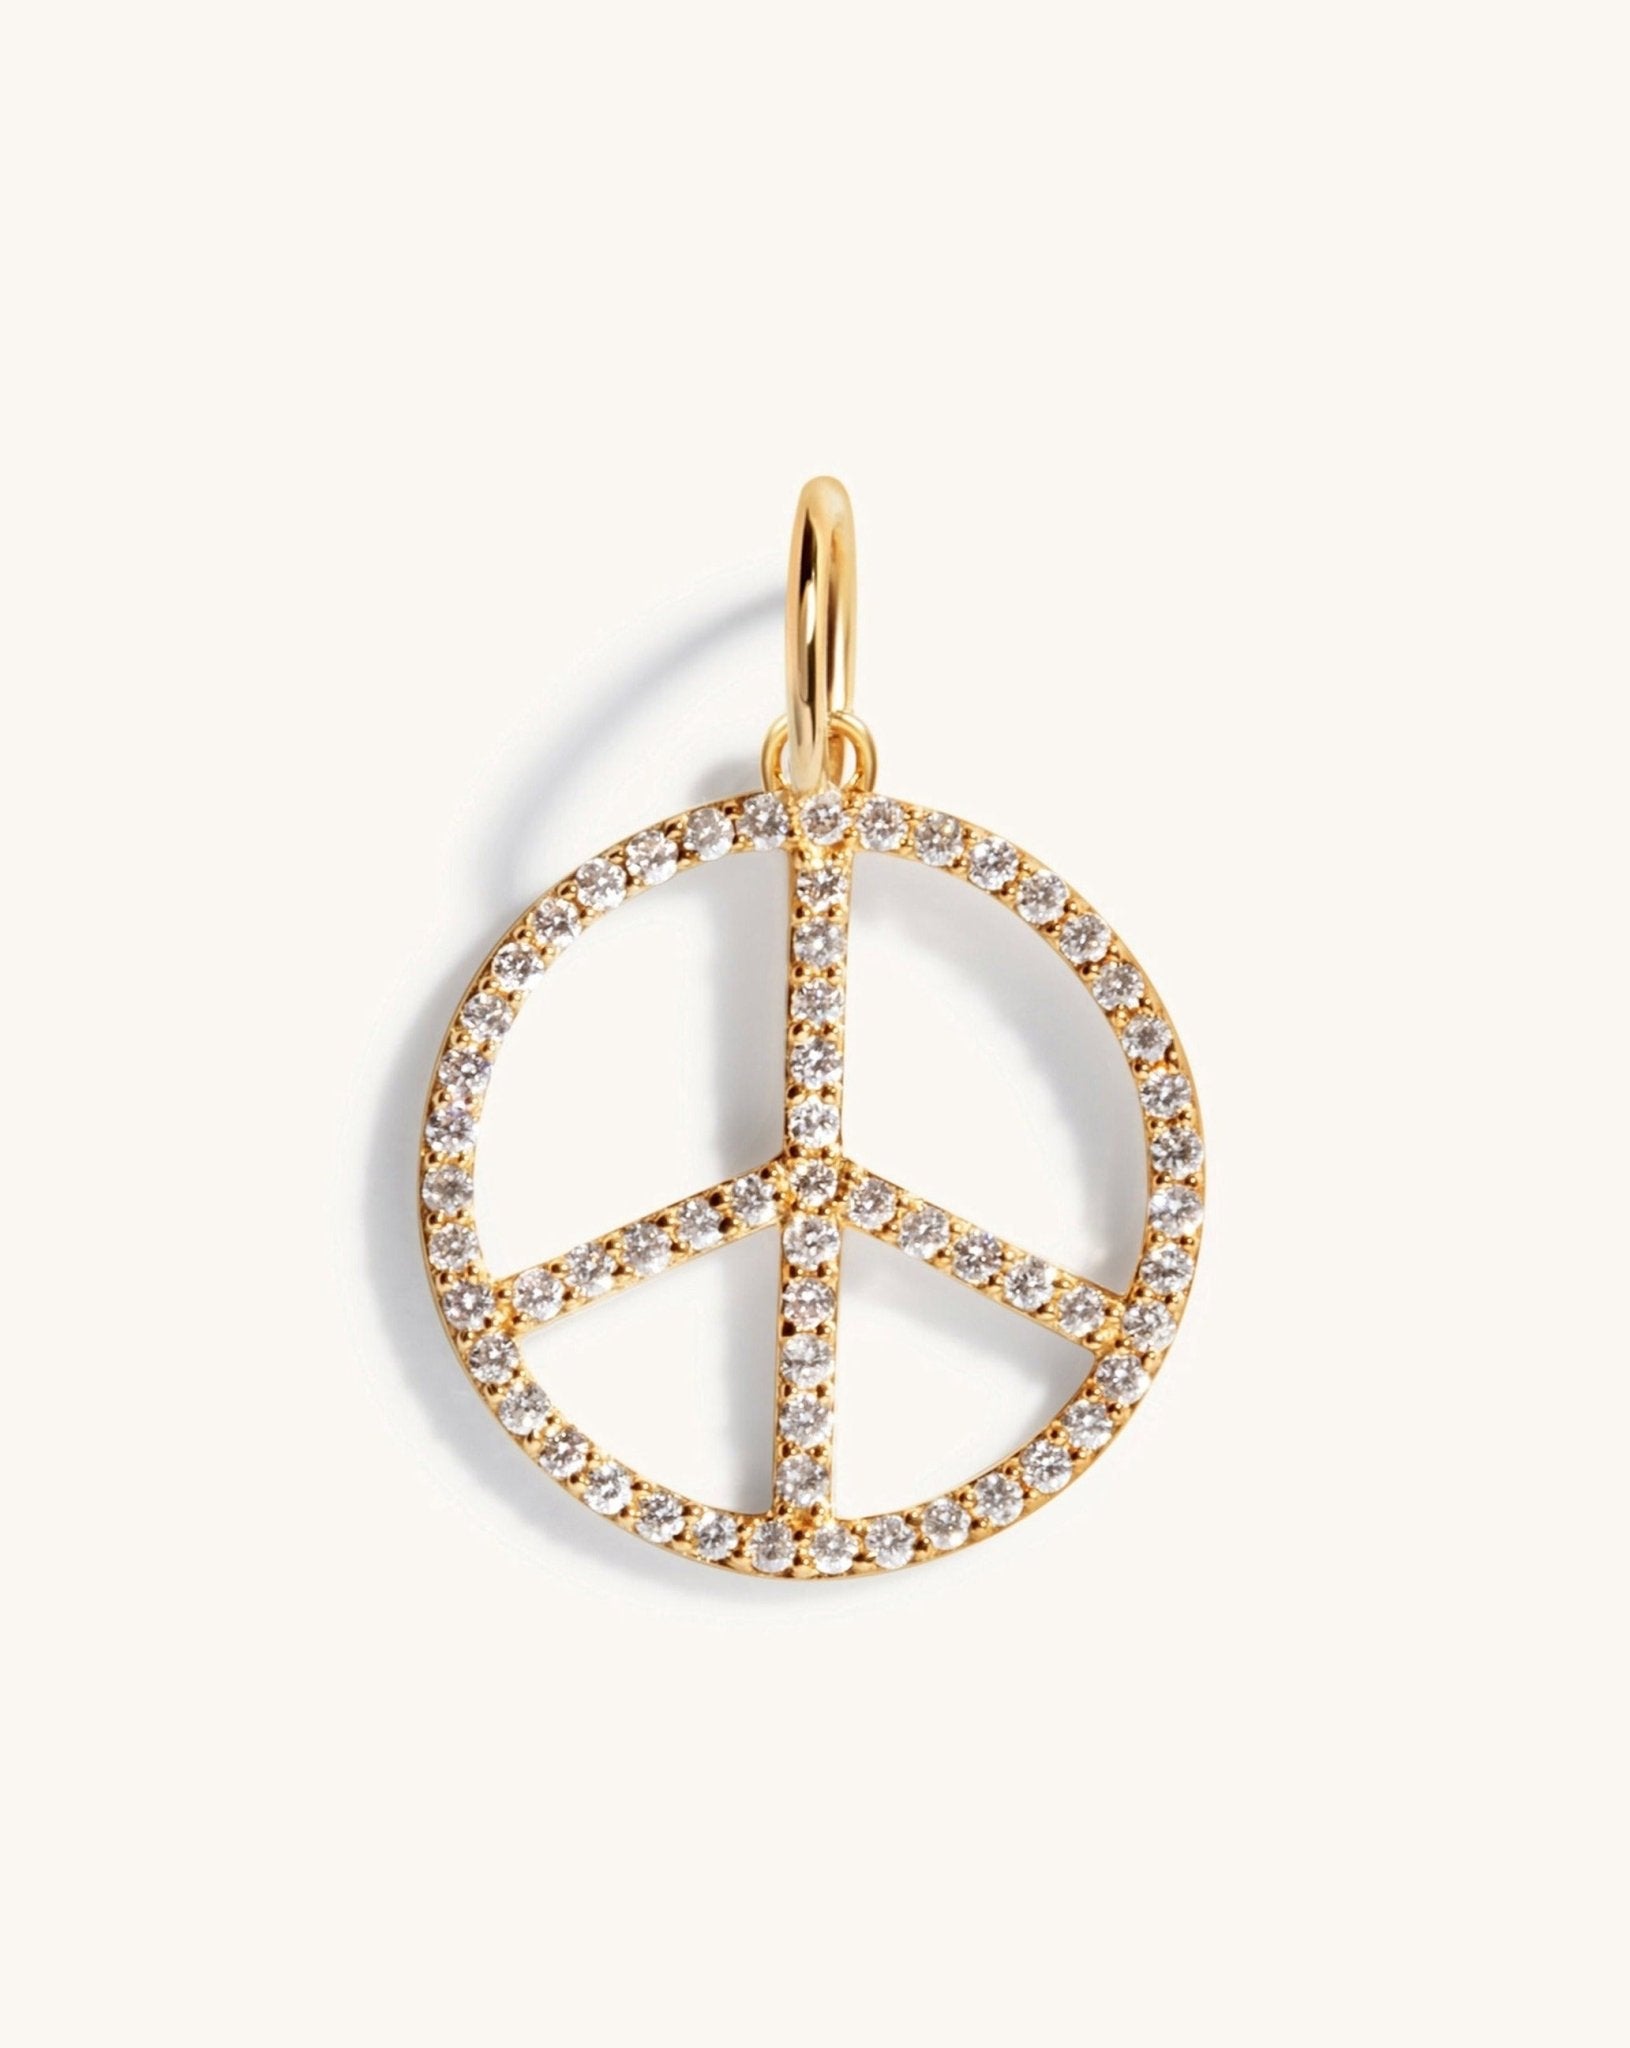 Peace Sign Necklace Charm - Sparkle Society